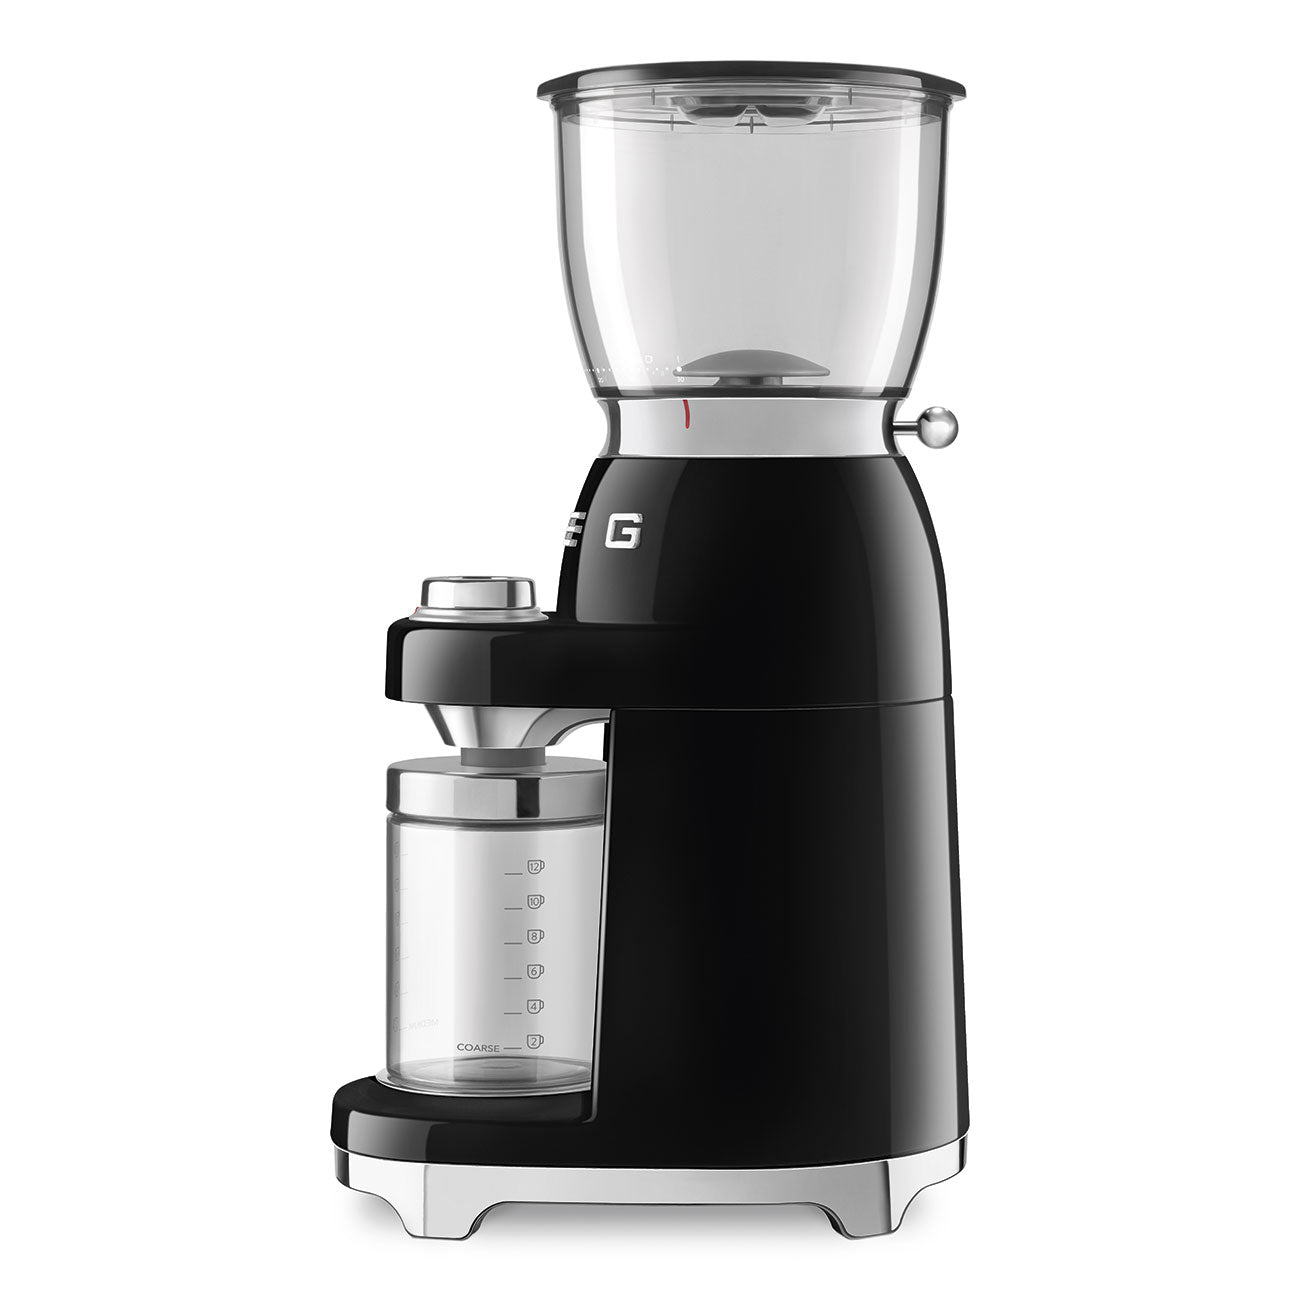 Coffee grinder smeg negro - CGF01BLUS